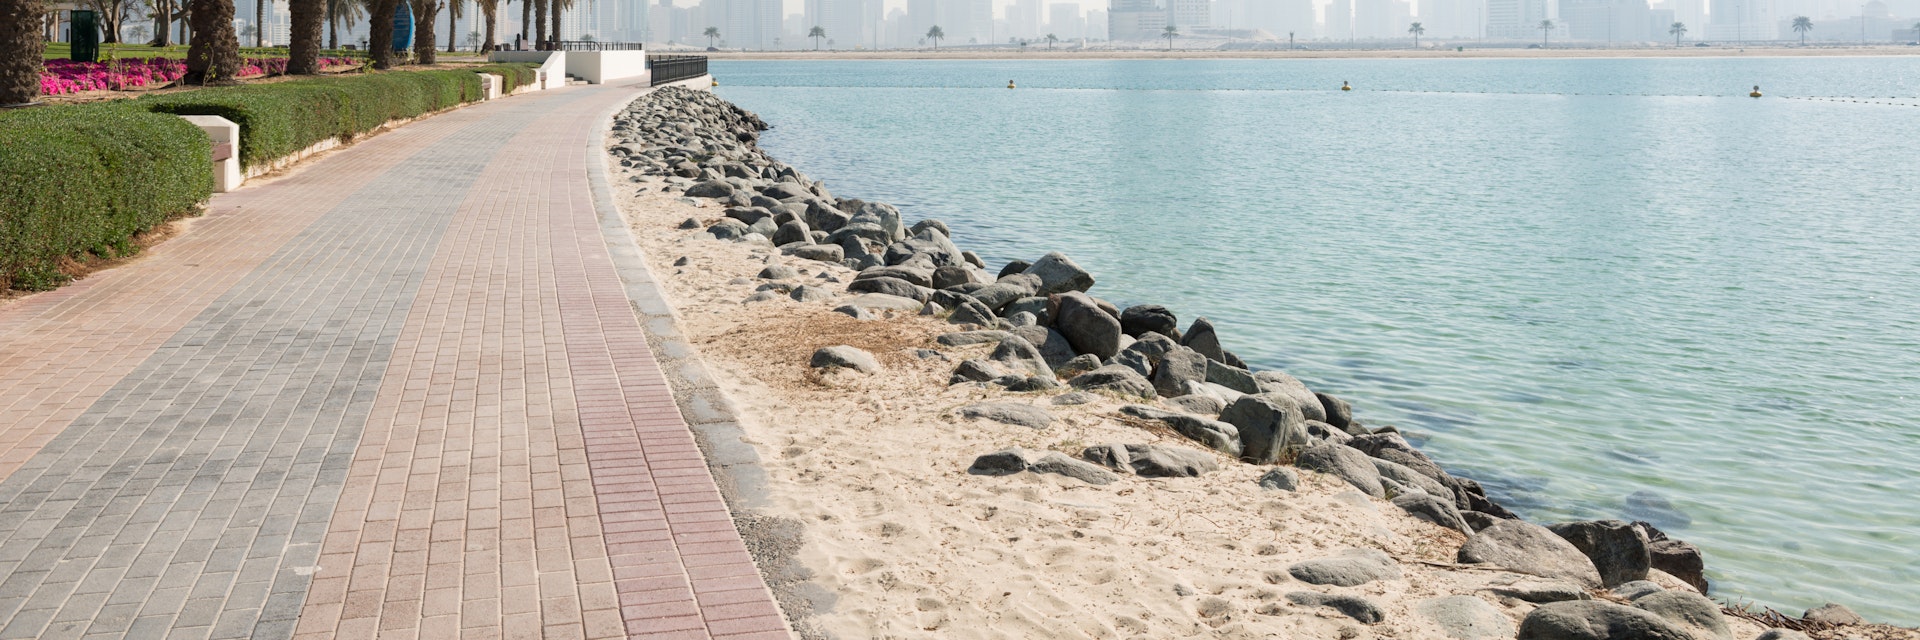 DUBAI, UAE - FEBRUARY 8, 2016: AL MAMZAR BEACH PARK